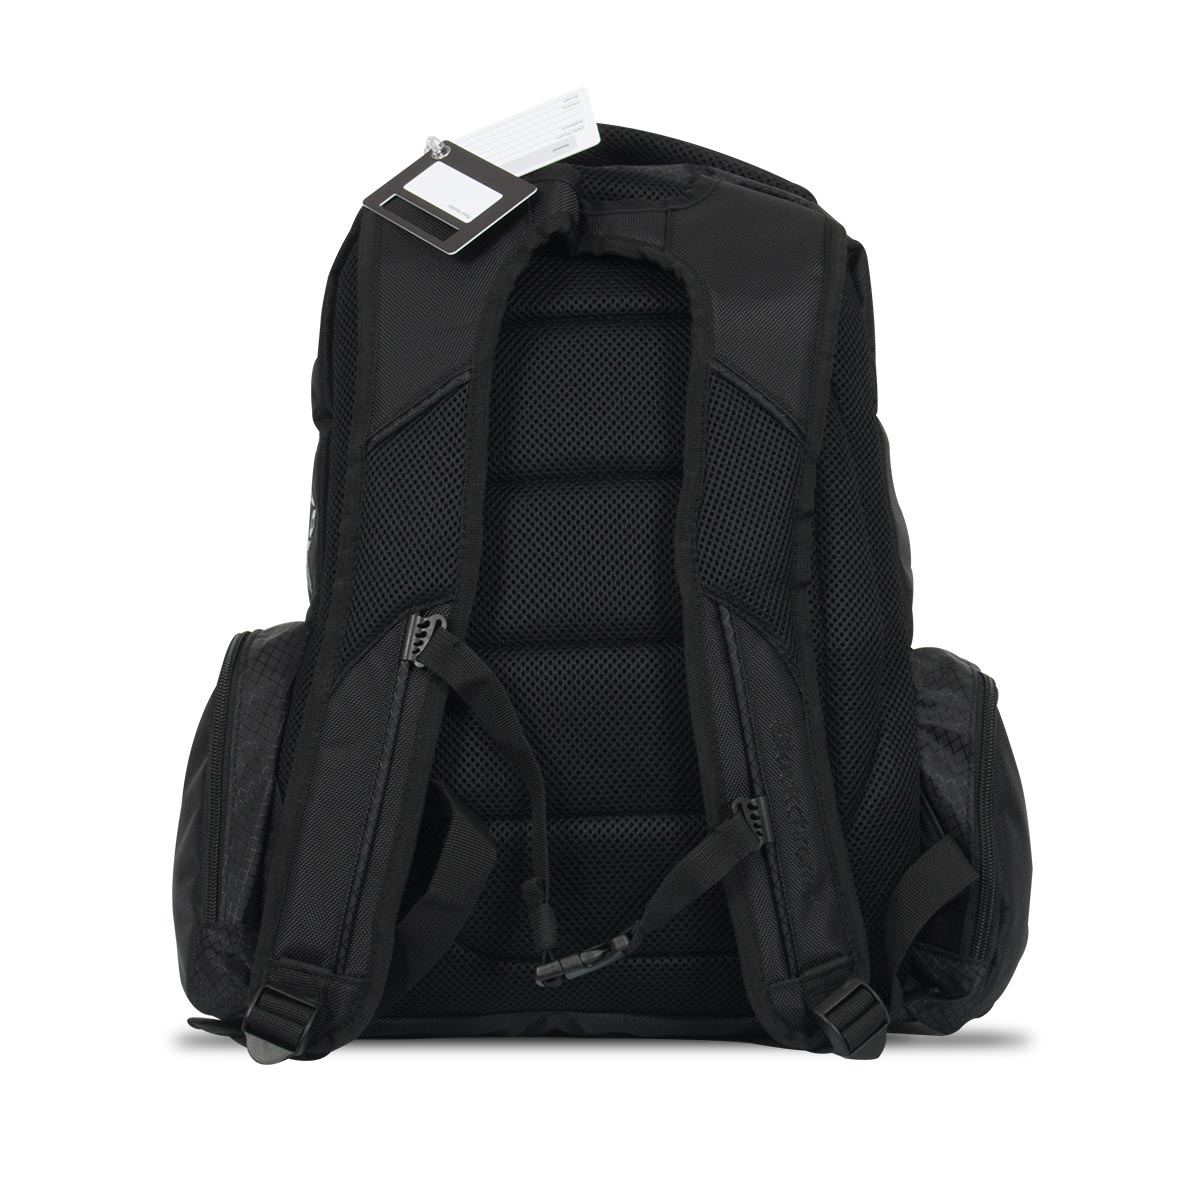 The Elite Backpack #3